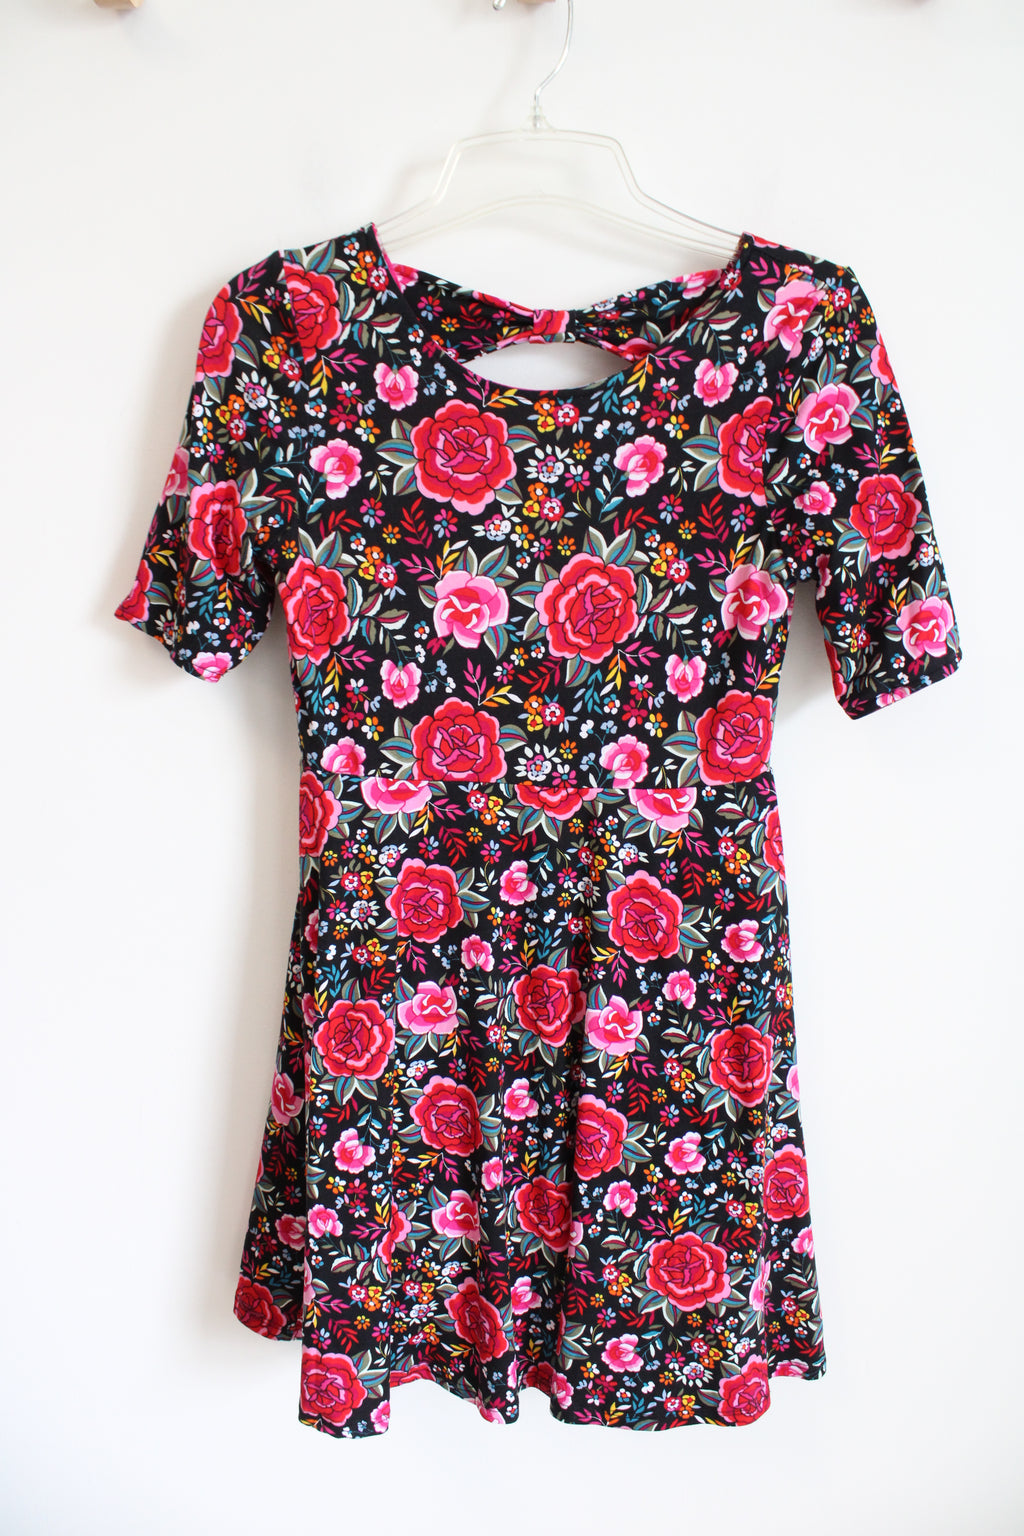 Emily West Black Floral/ Pink Unicorn Patterned Reversible Dress | 14